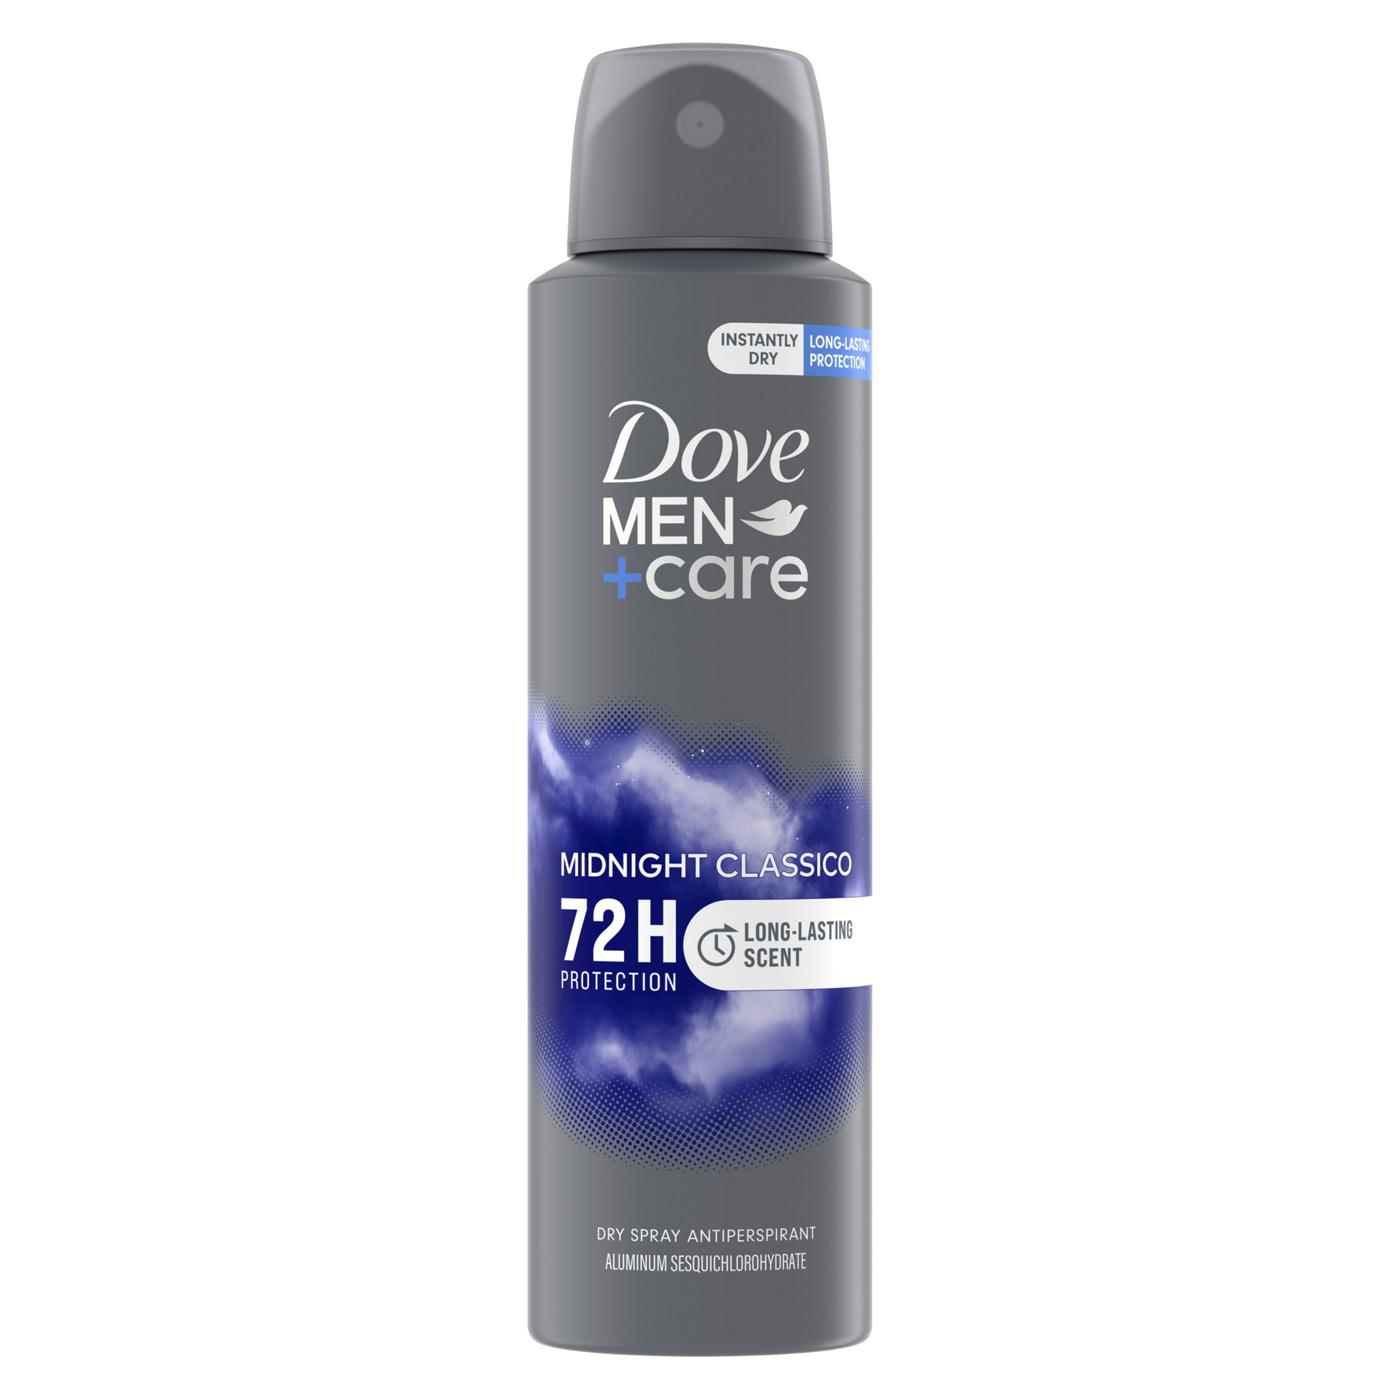 Dove Men+Care Dry Spray Antiperspirant - Midnight Classico; image 1 of 2